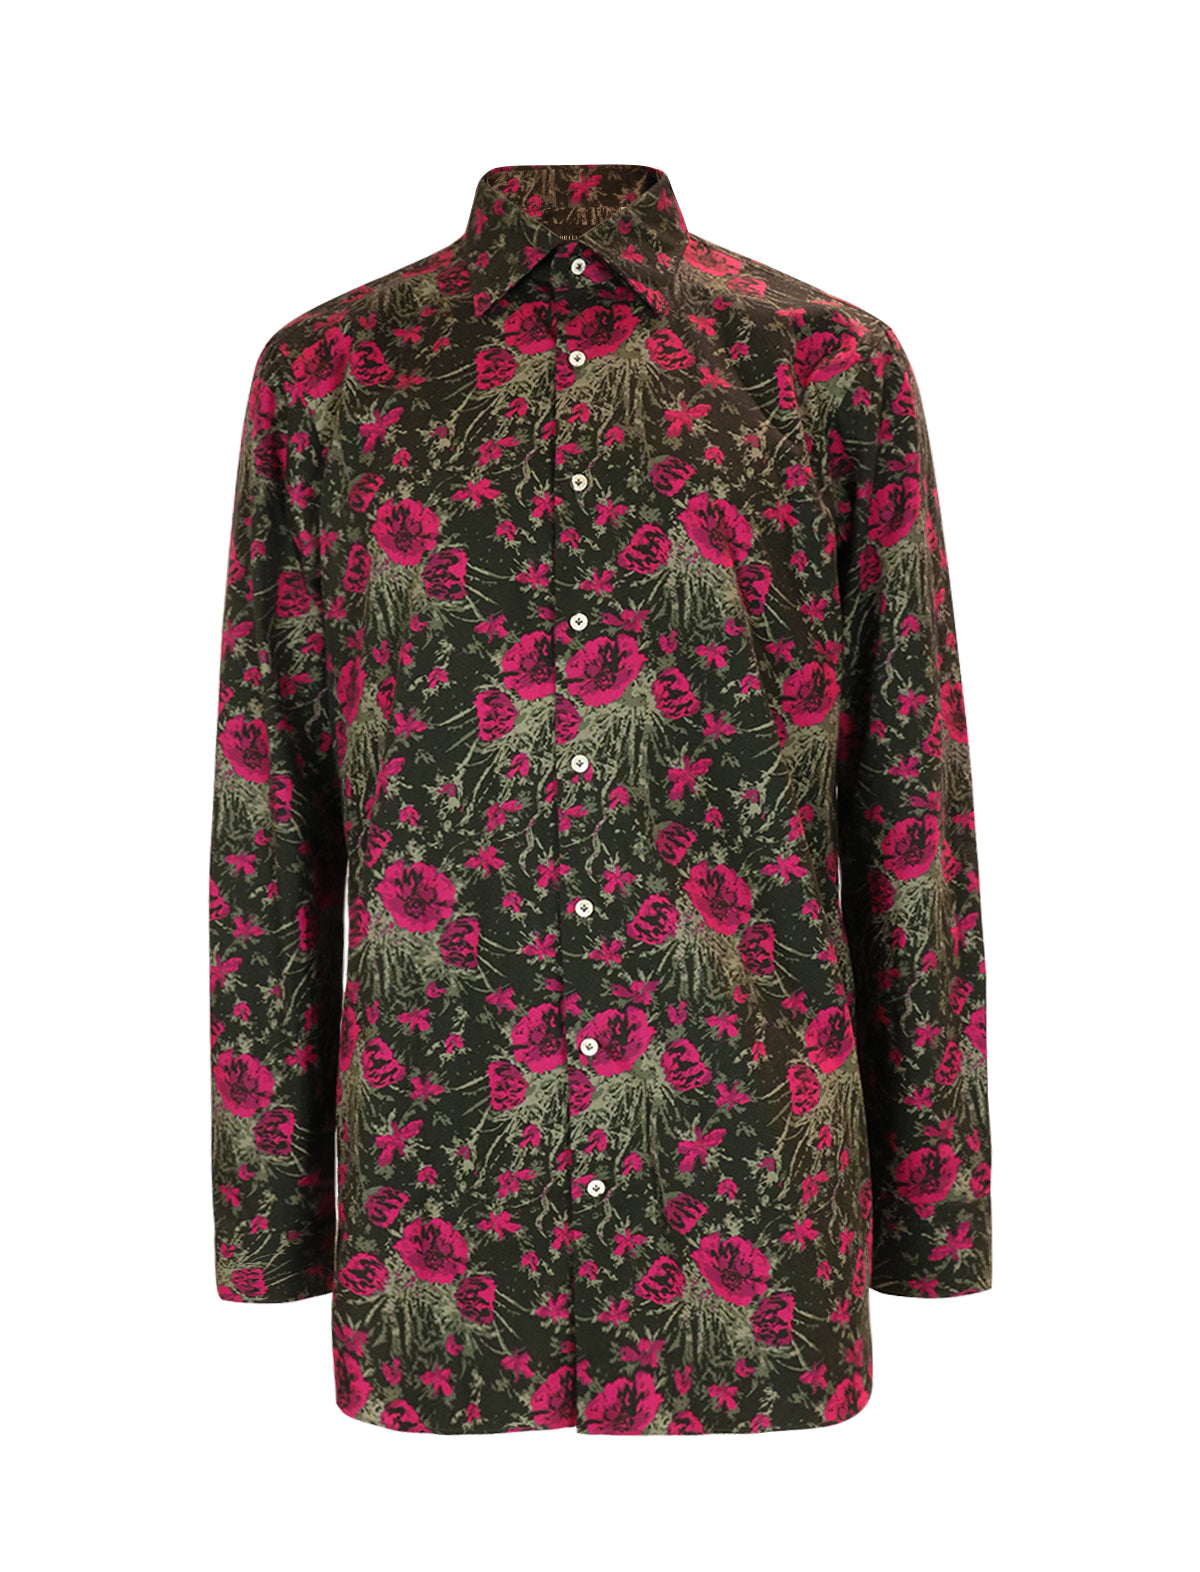 GABRIELE PASINI Cotton Shirt in Black & Fuchsia Floral